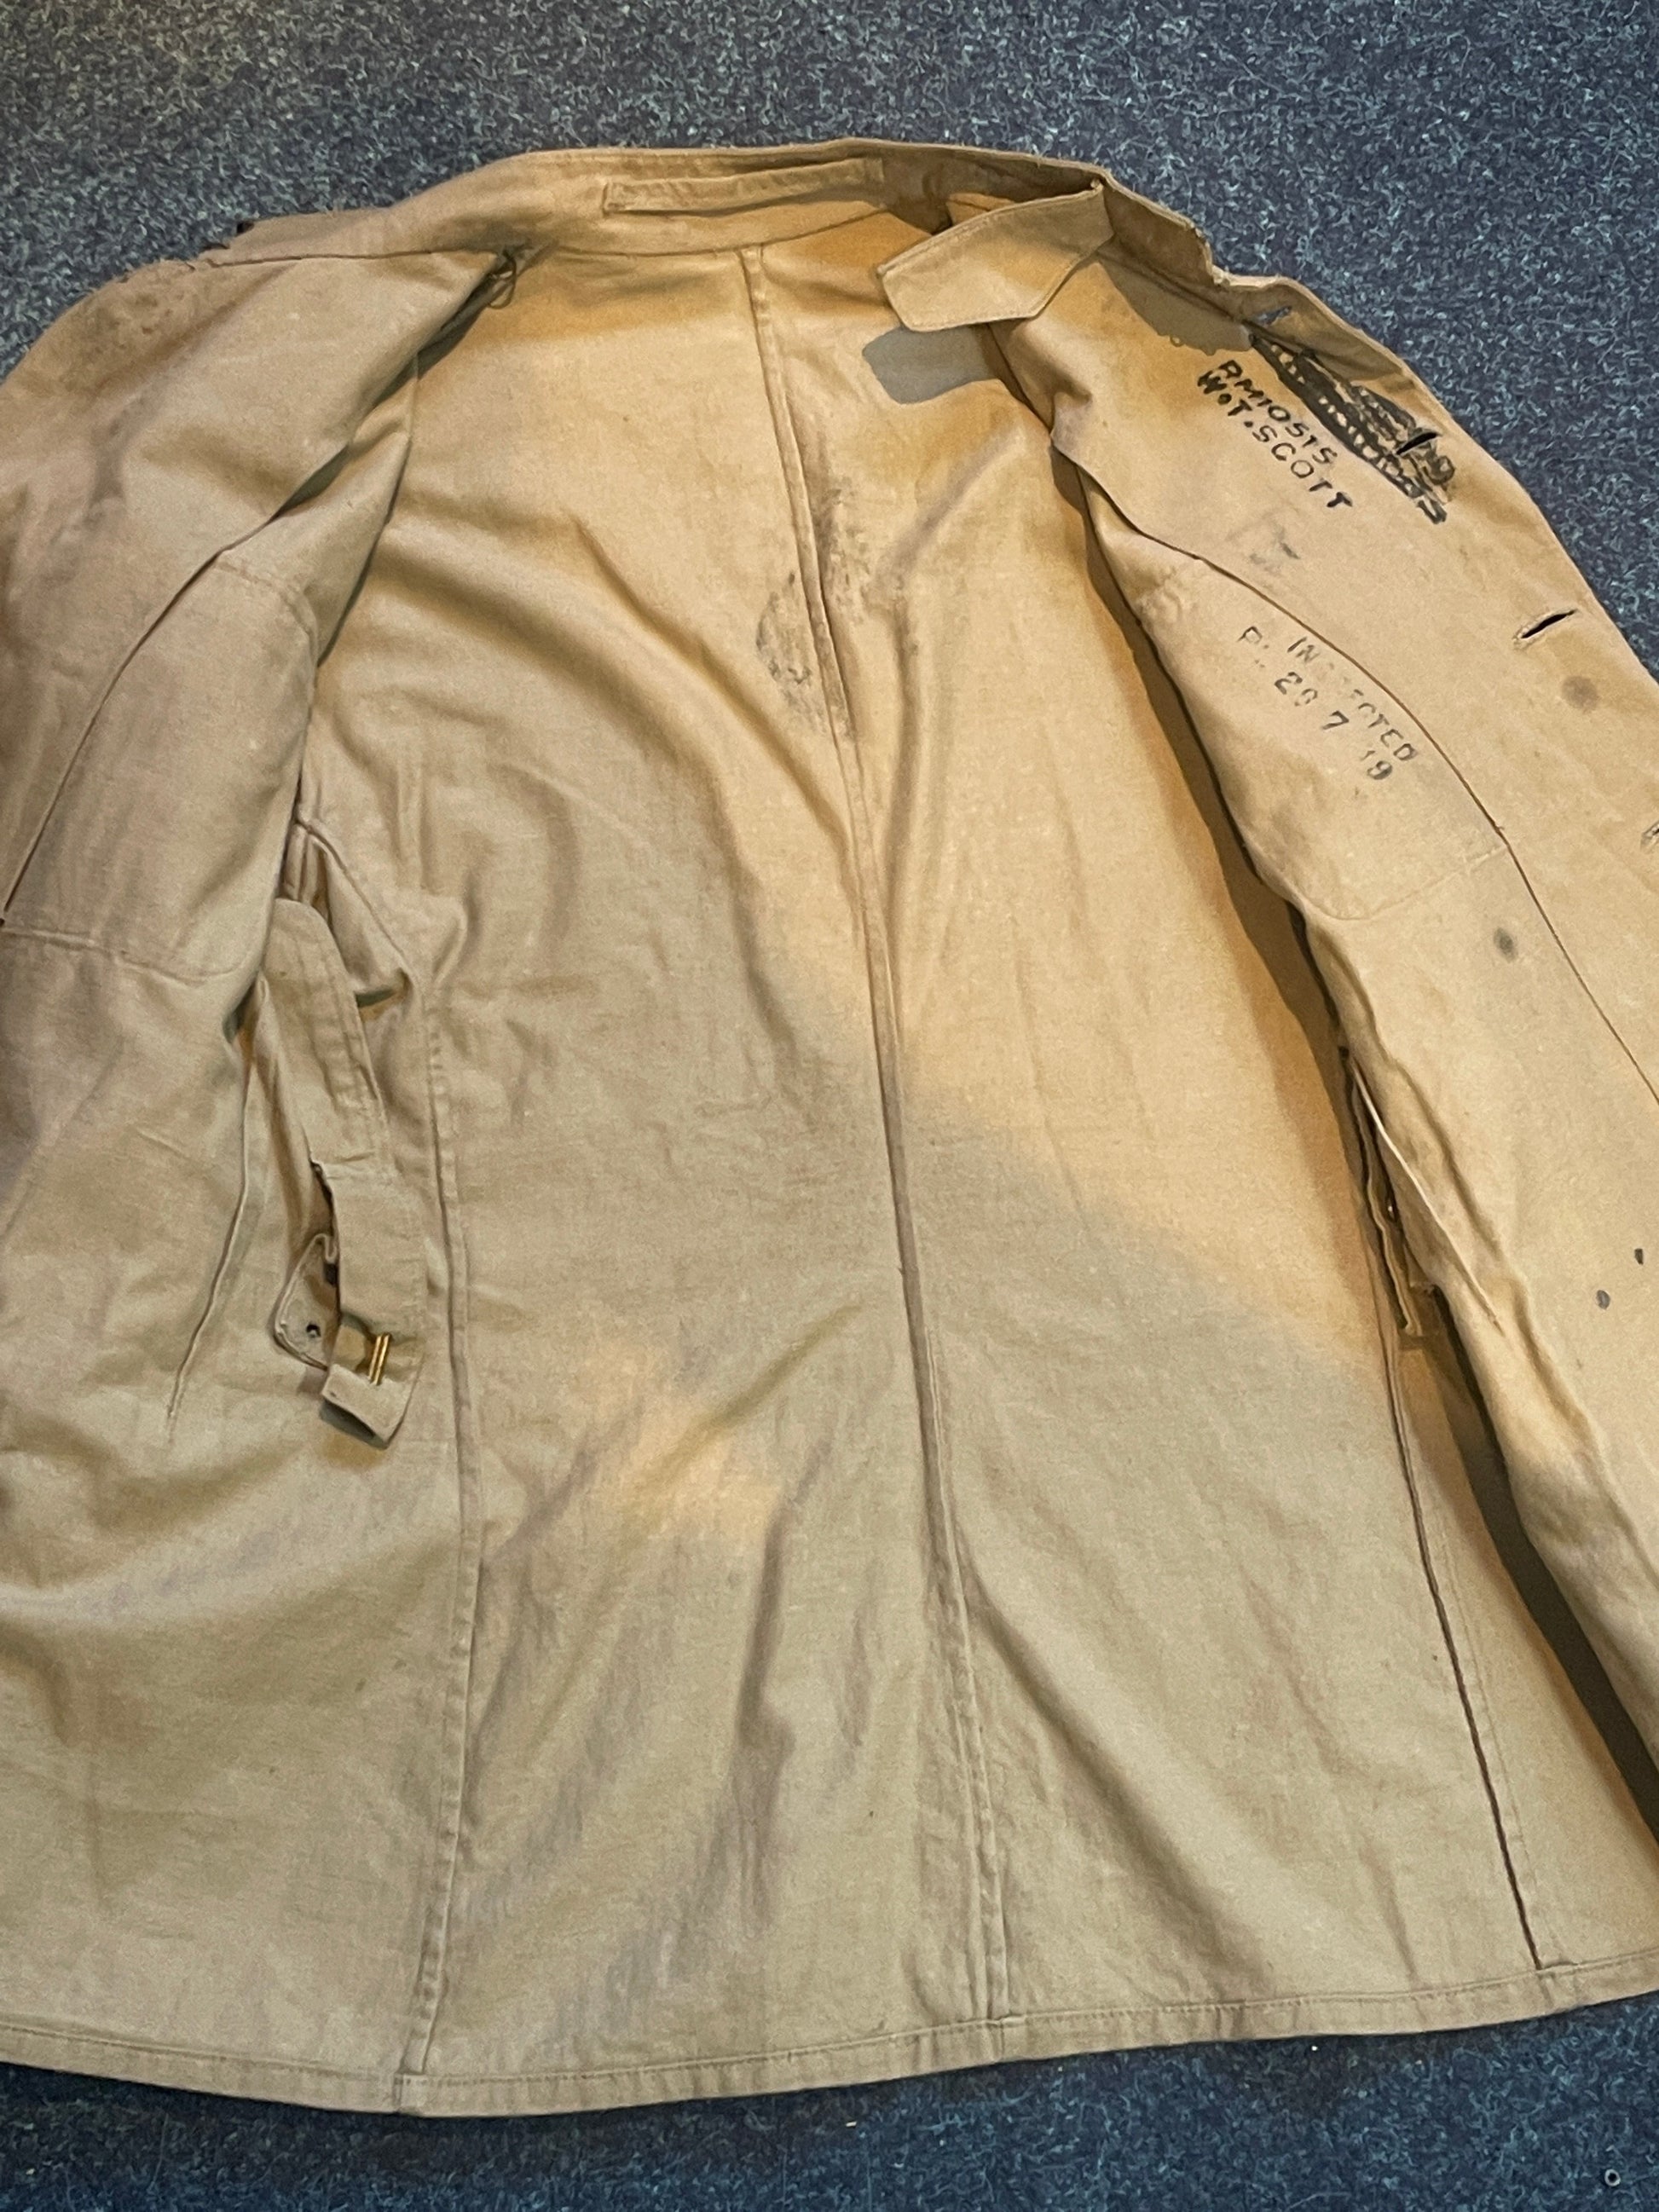 Tropical Uniform Jacket Named to Royal Marine